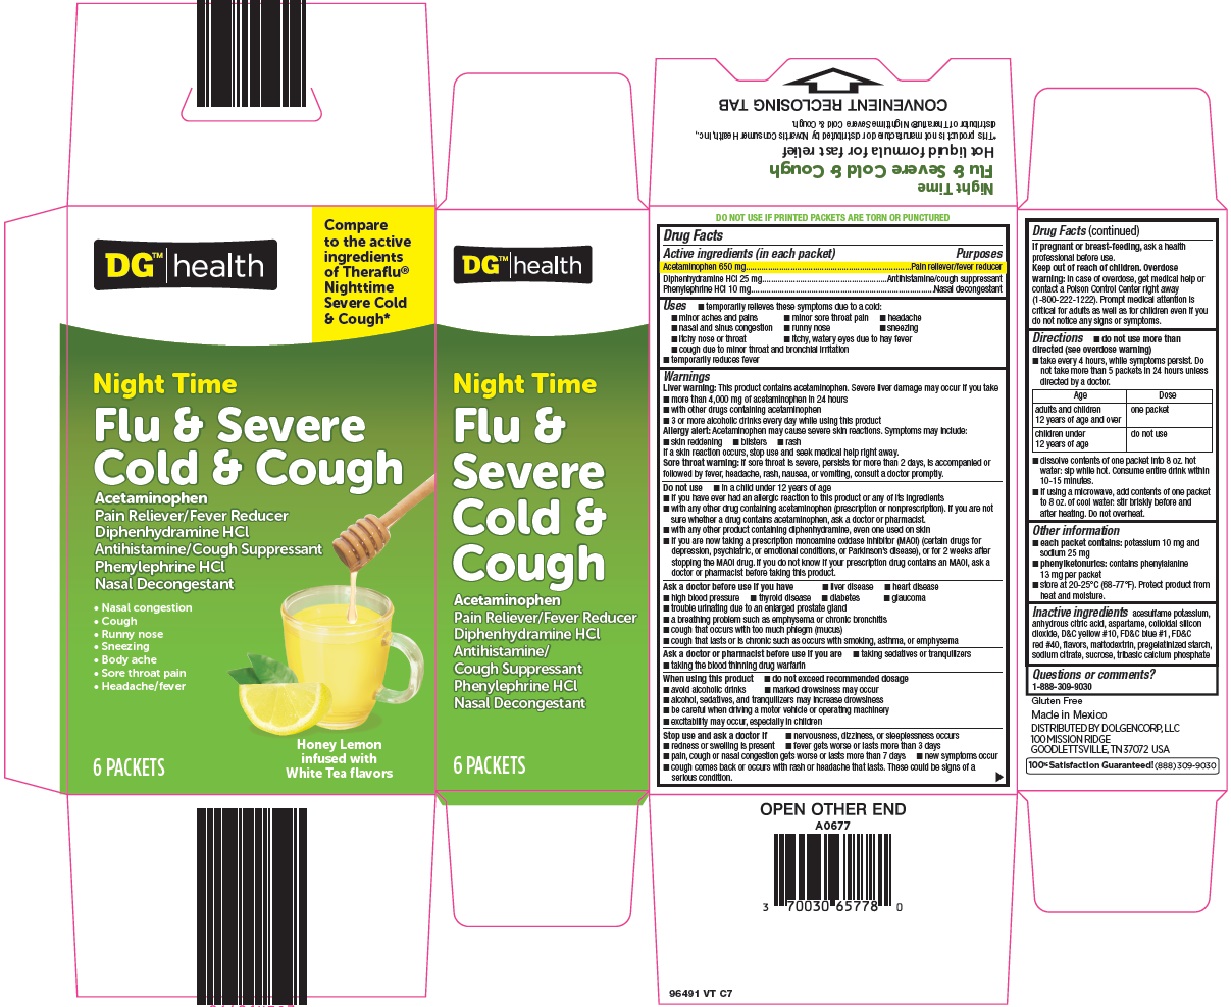 Flu & Severe Cold & Cough image